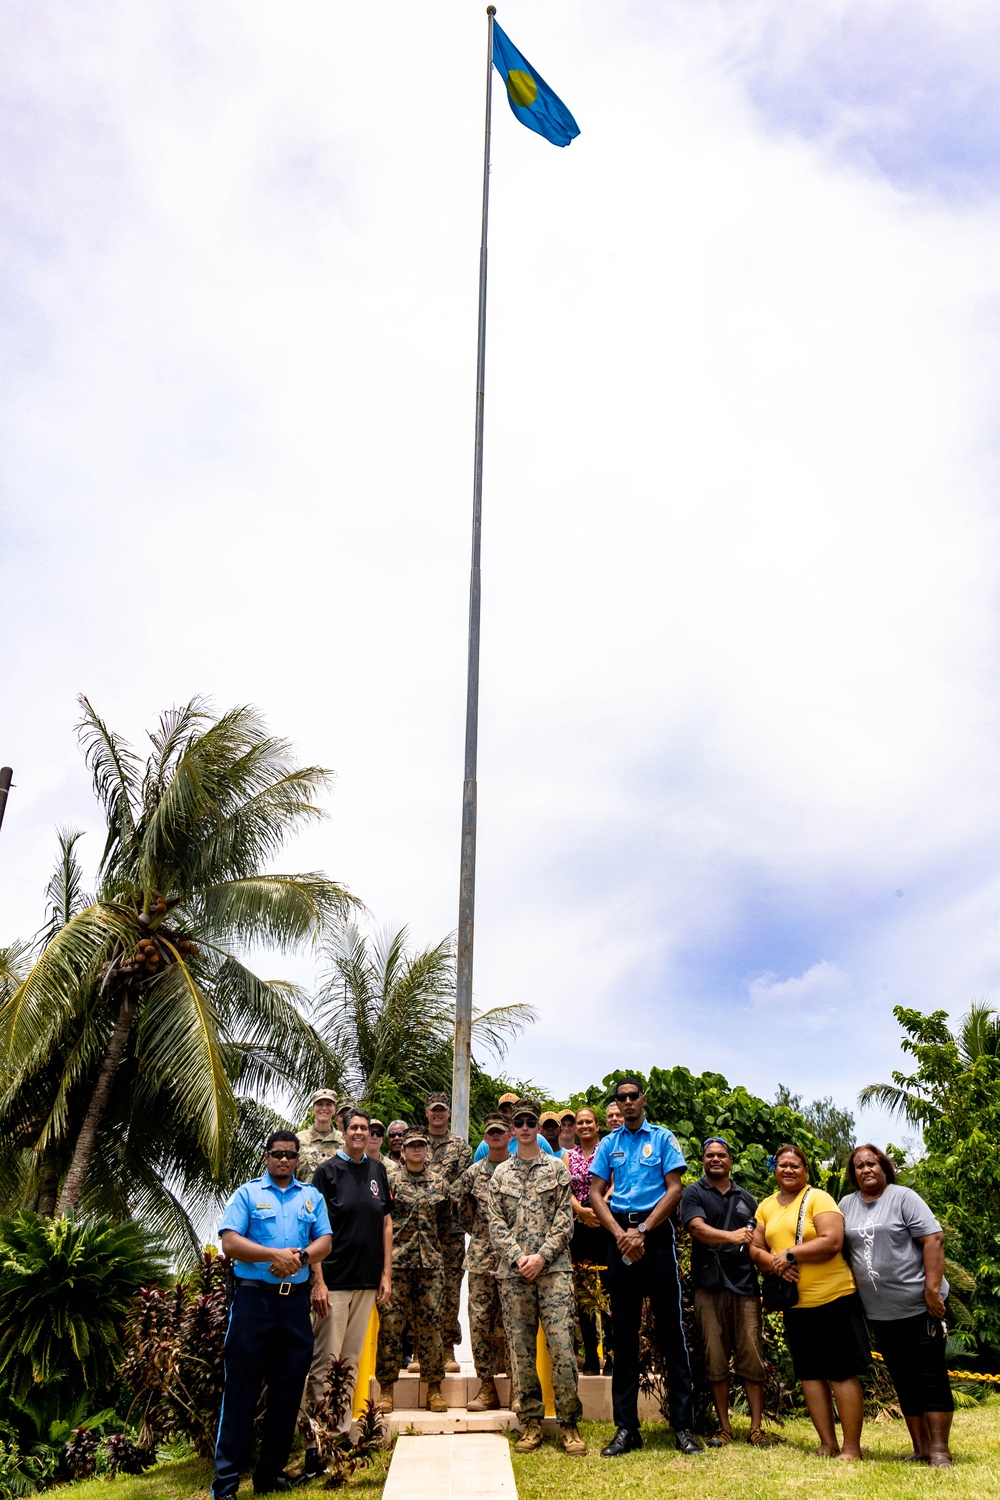 KM23: President of Palau’s Flag Pole